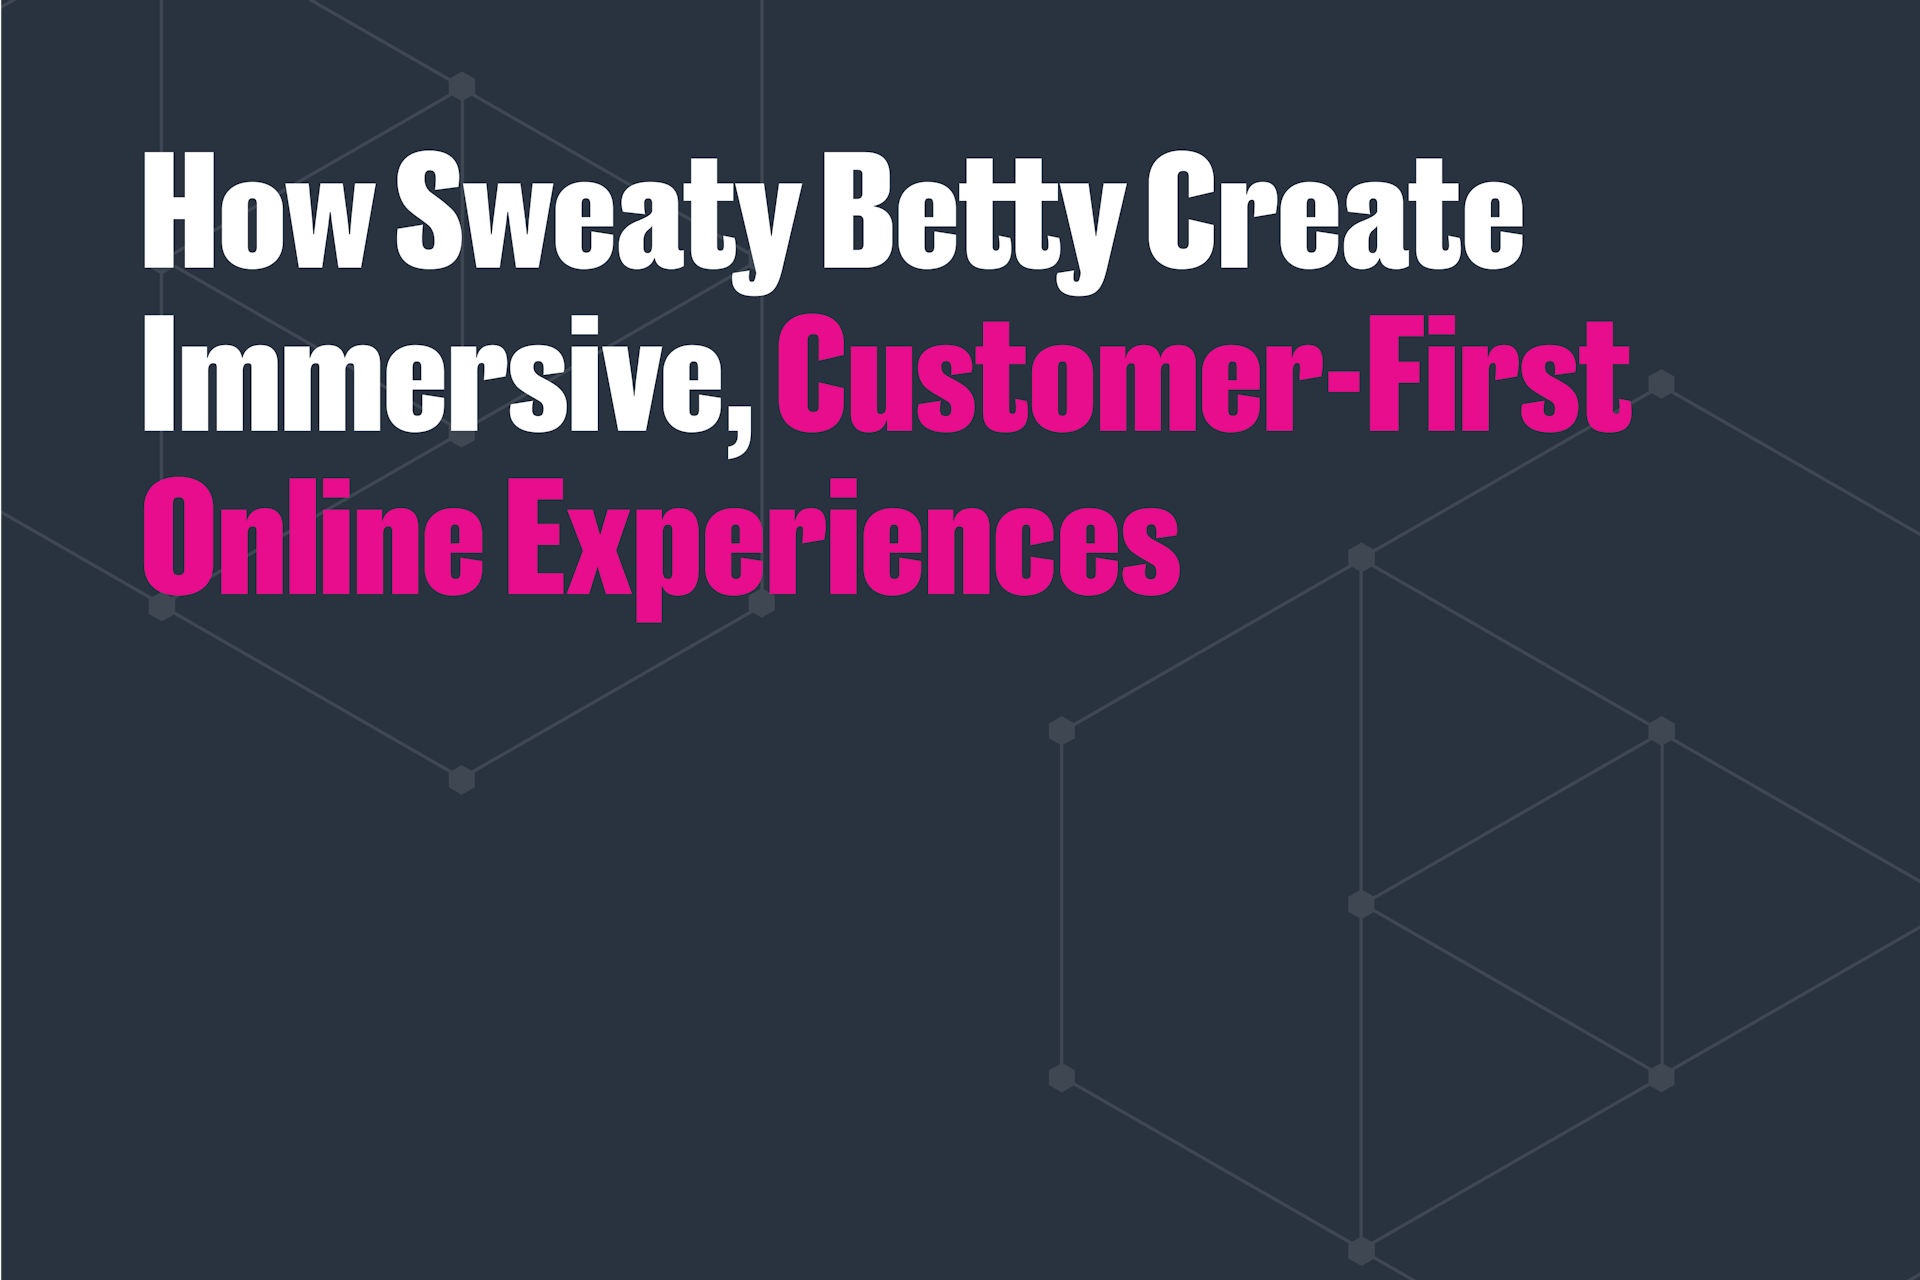 Sweaty Betty create immersive, customer-first online experiences